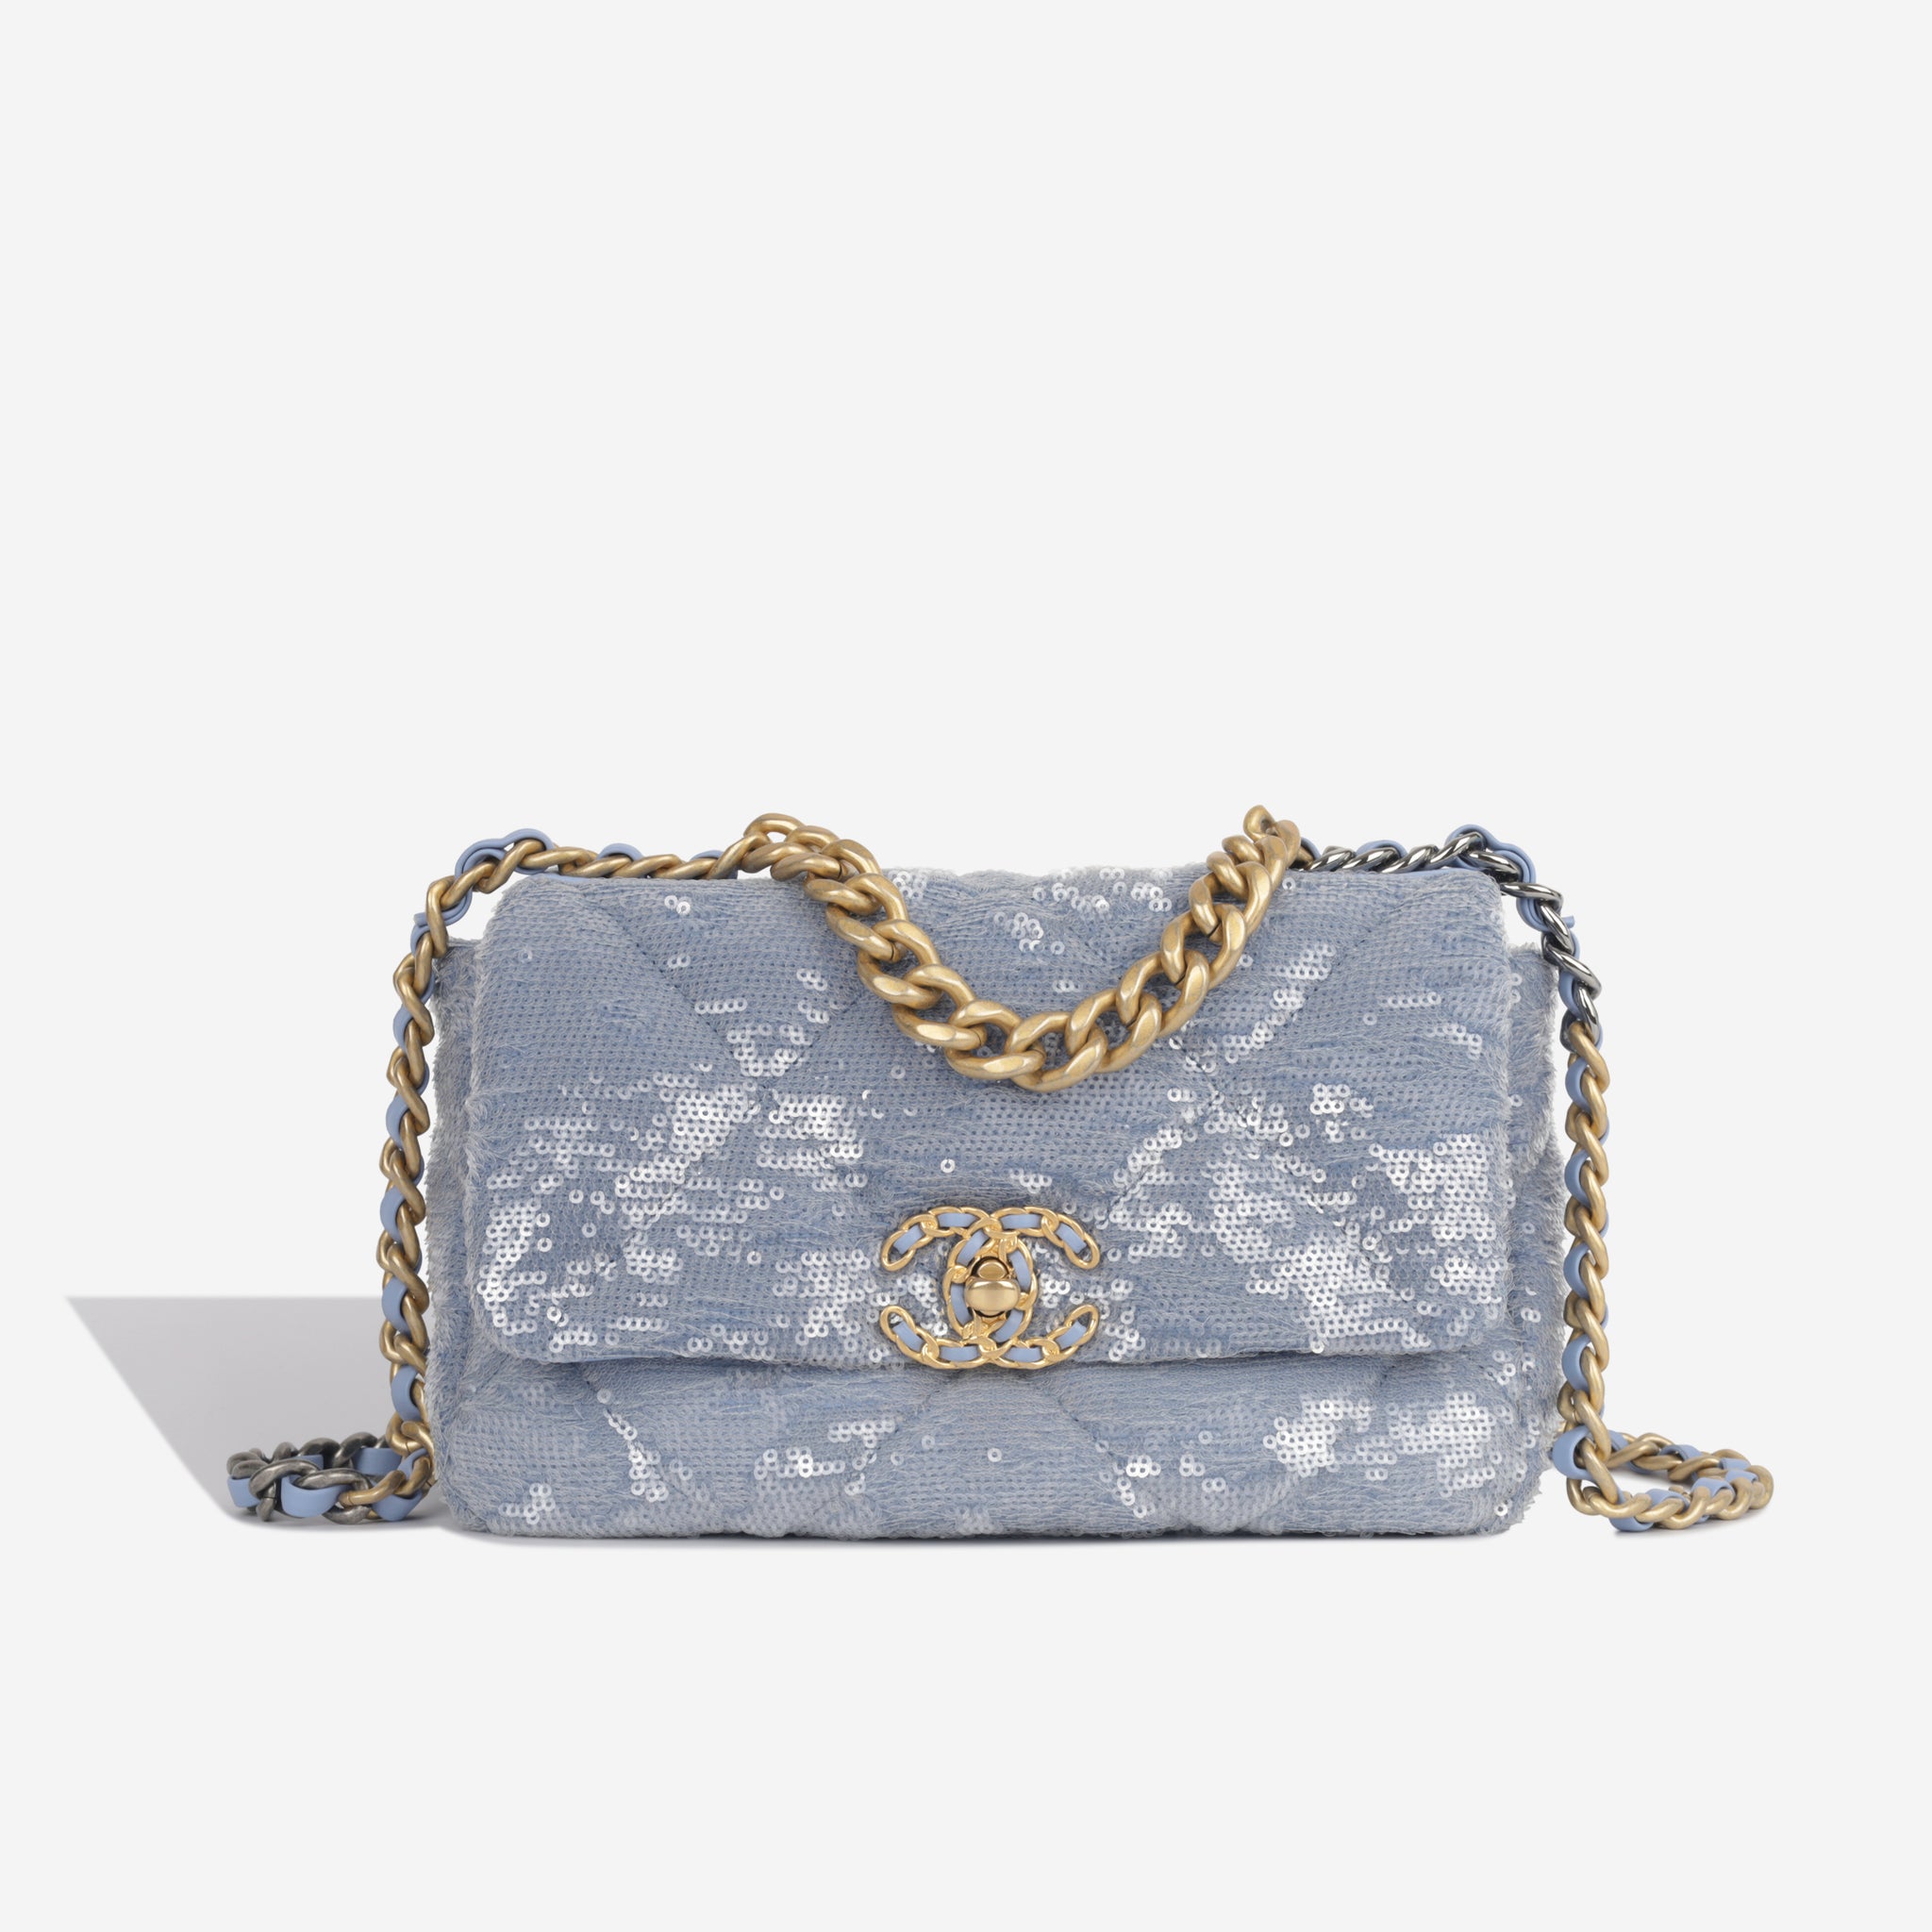 Chanel 19 glitter handbag Chanel Blue in Glitter - 25250811